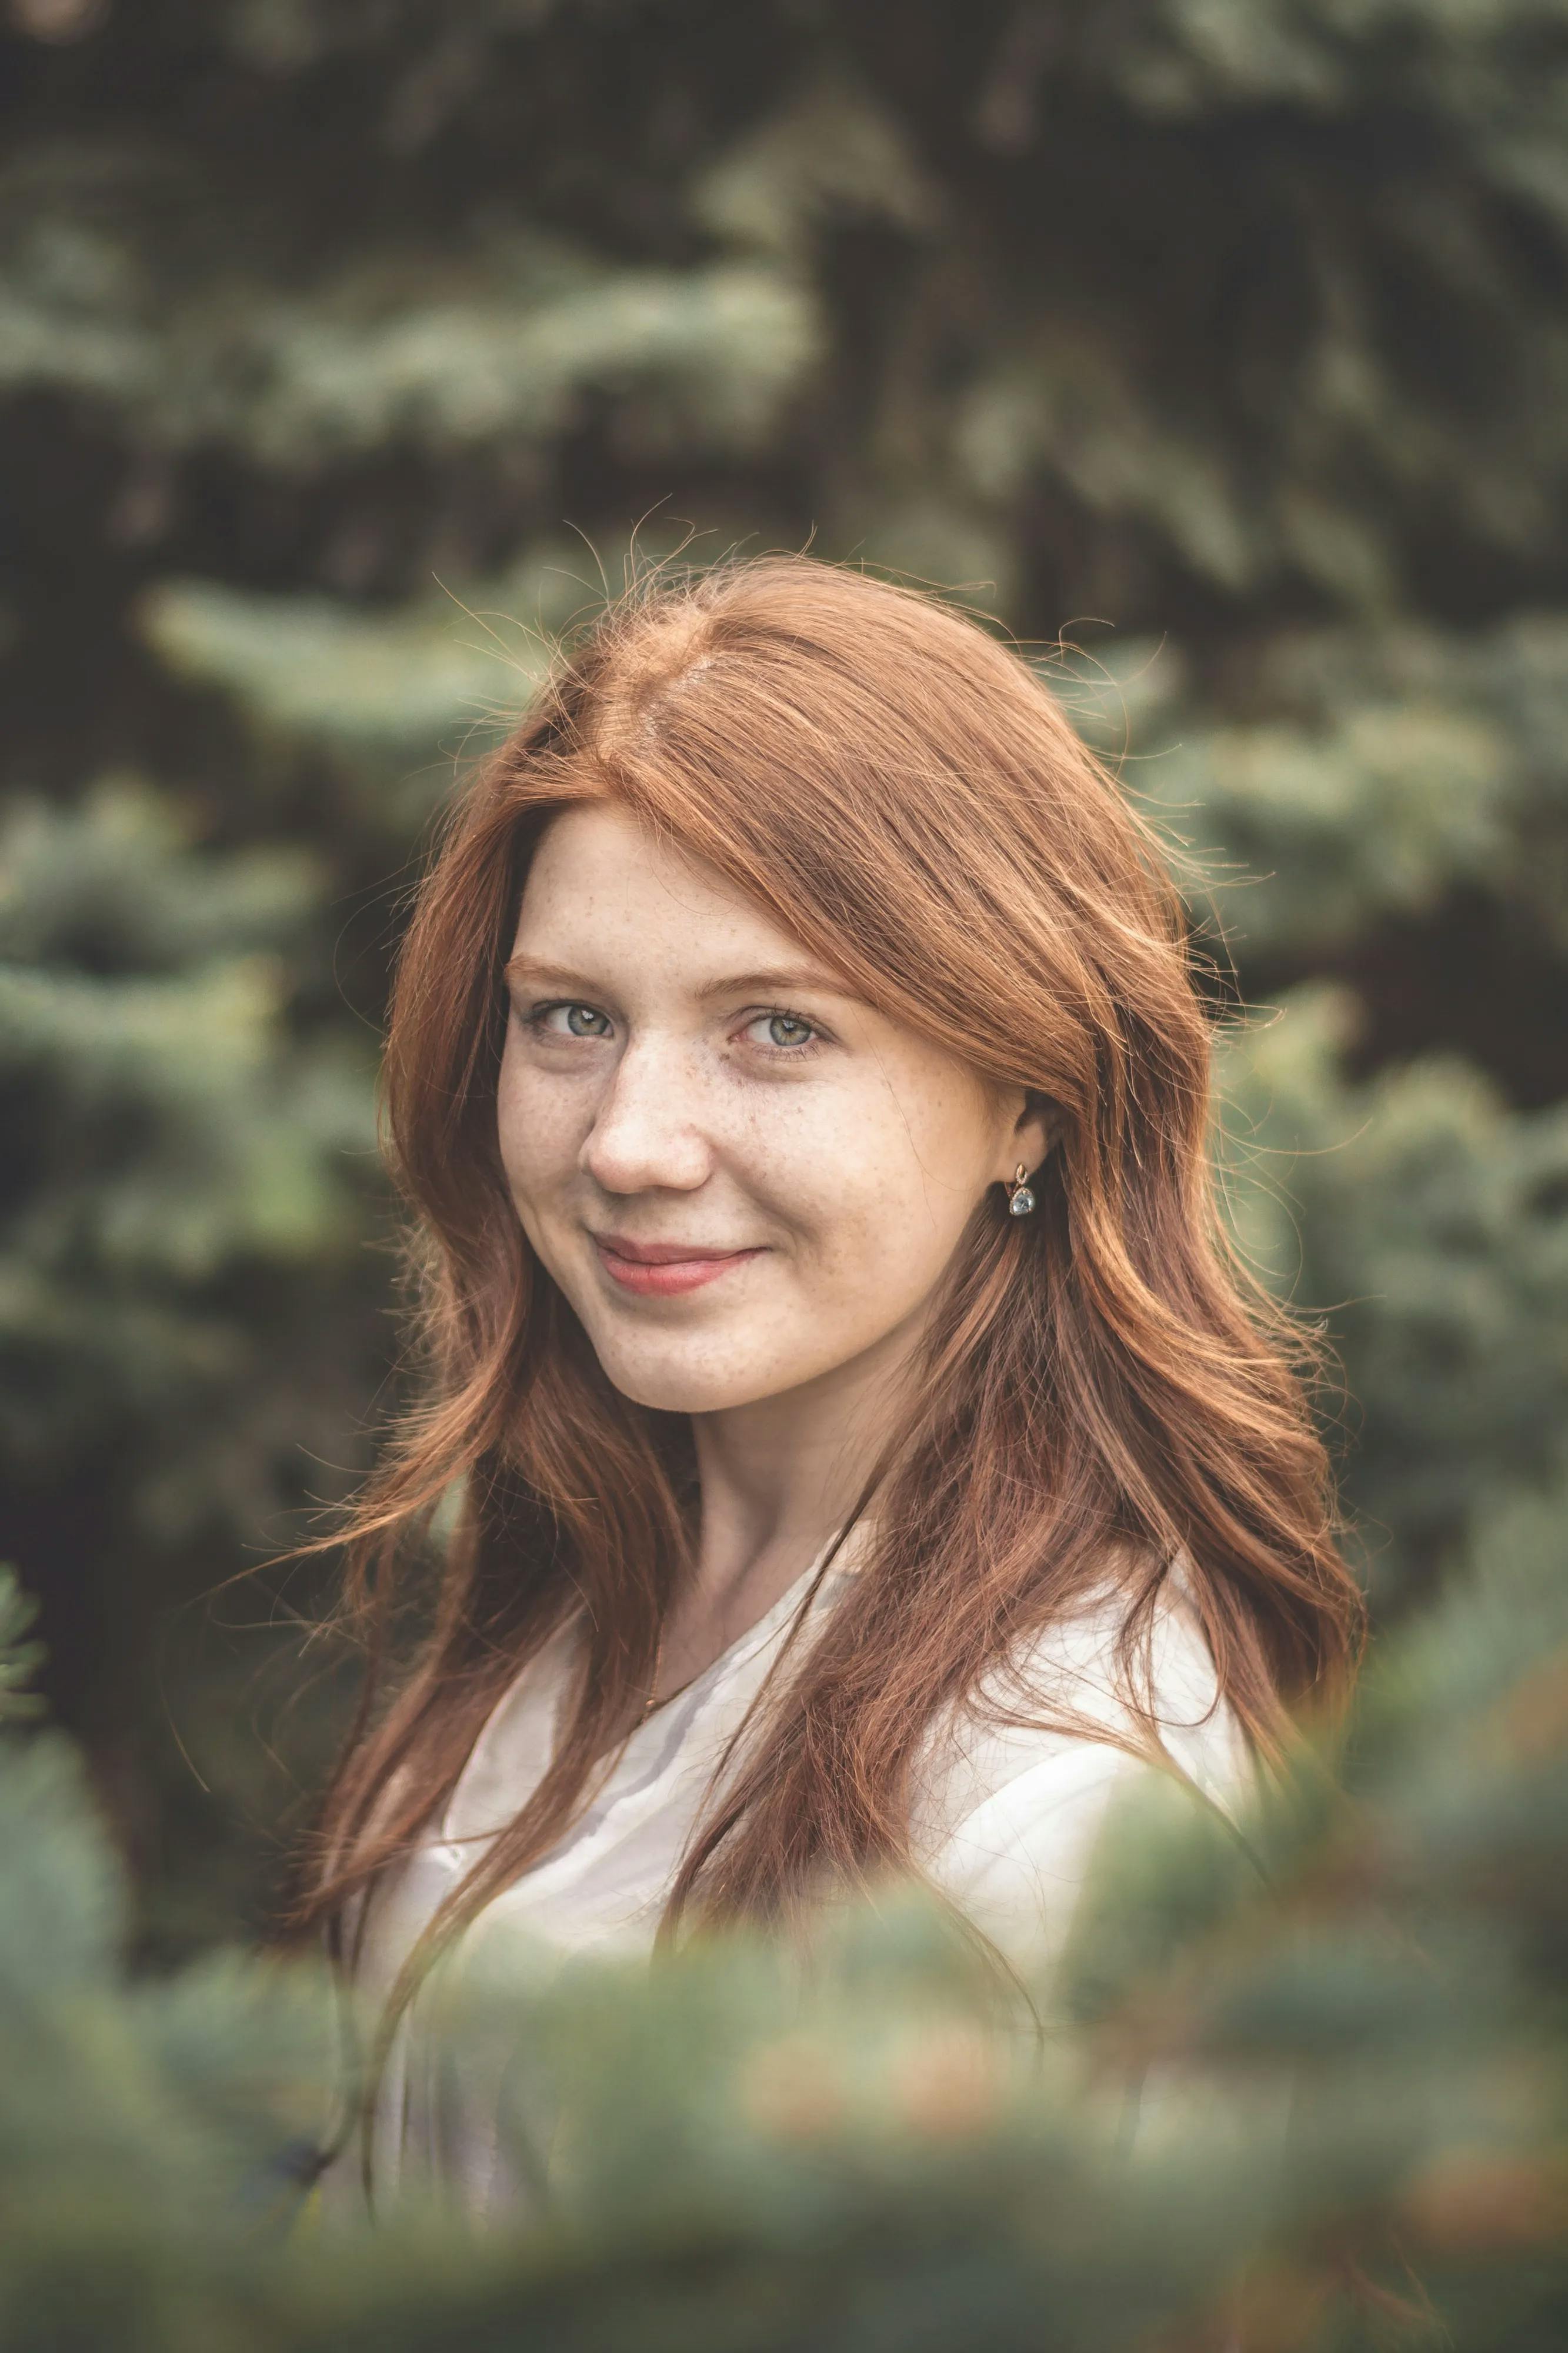 Redheaded woman smiling outside amongst greenery